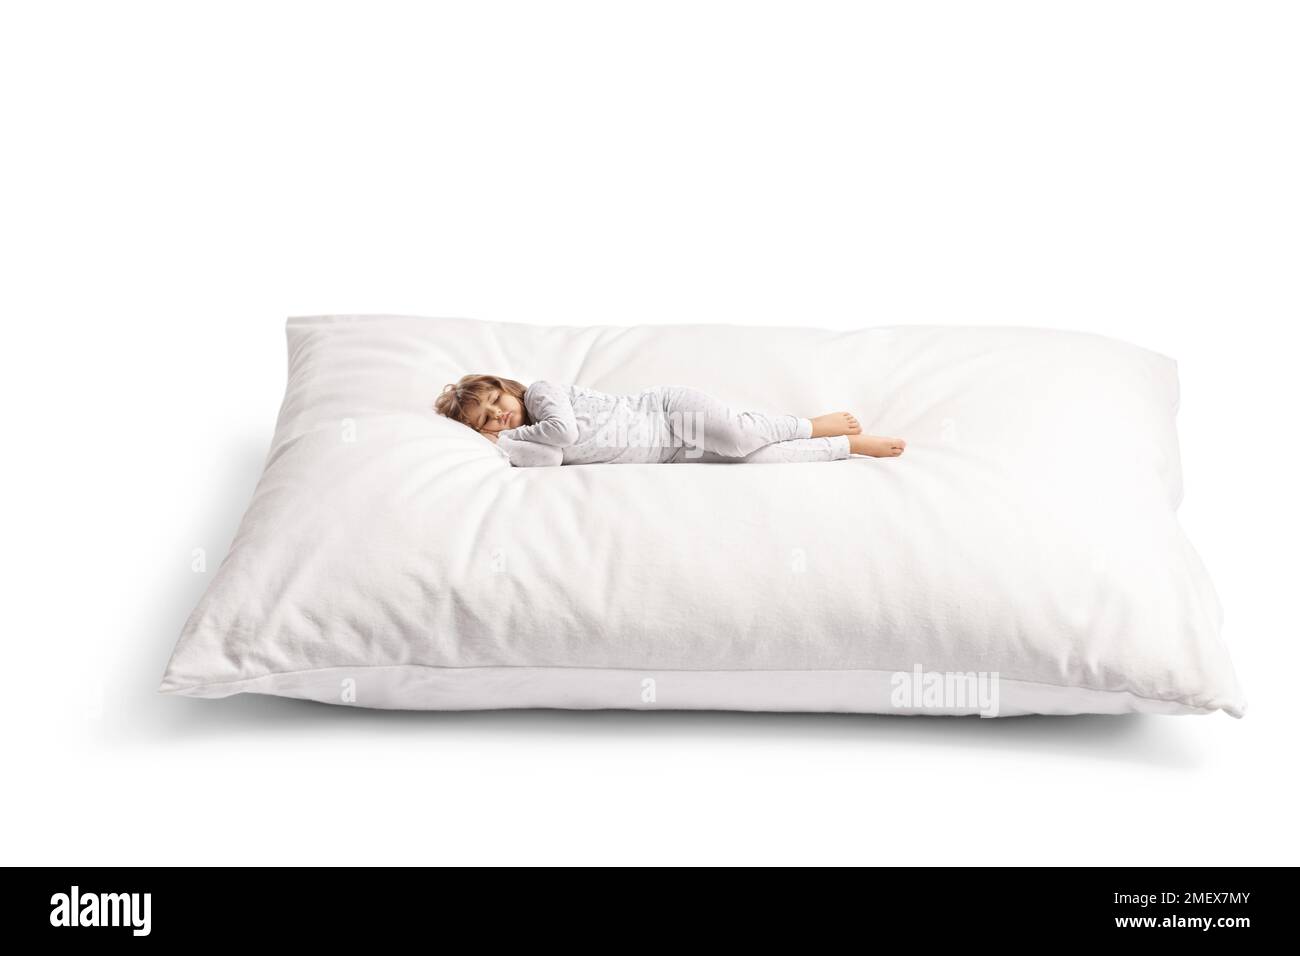 Almohada o almohada pequeña para bebé Imágenes recortadas de stock